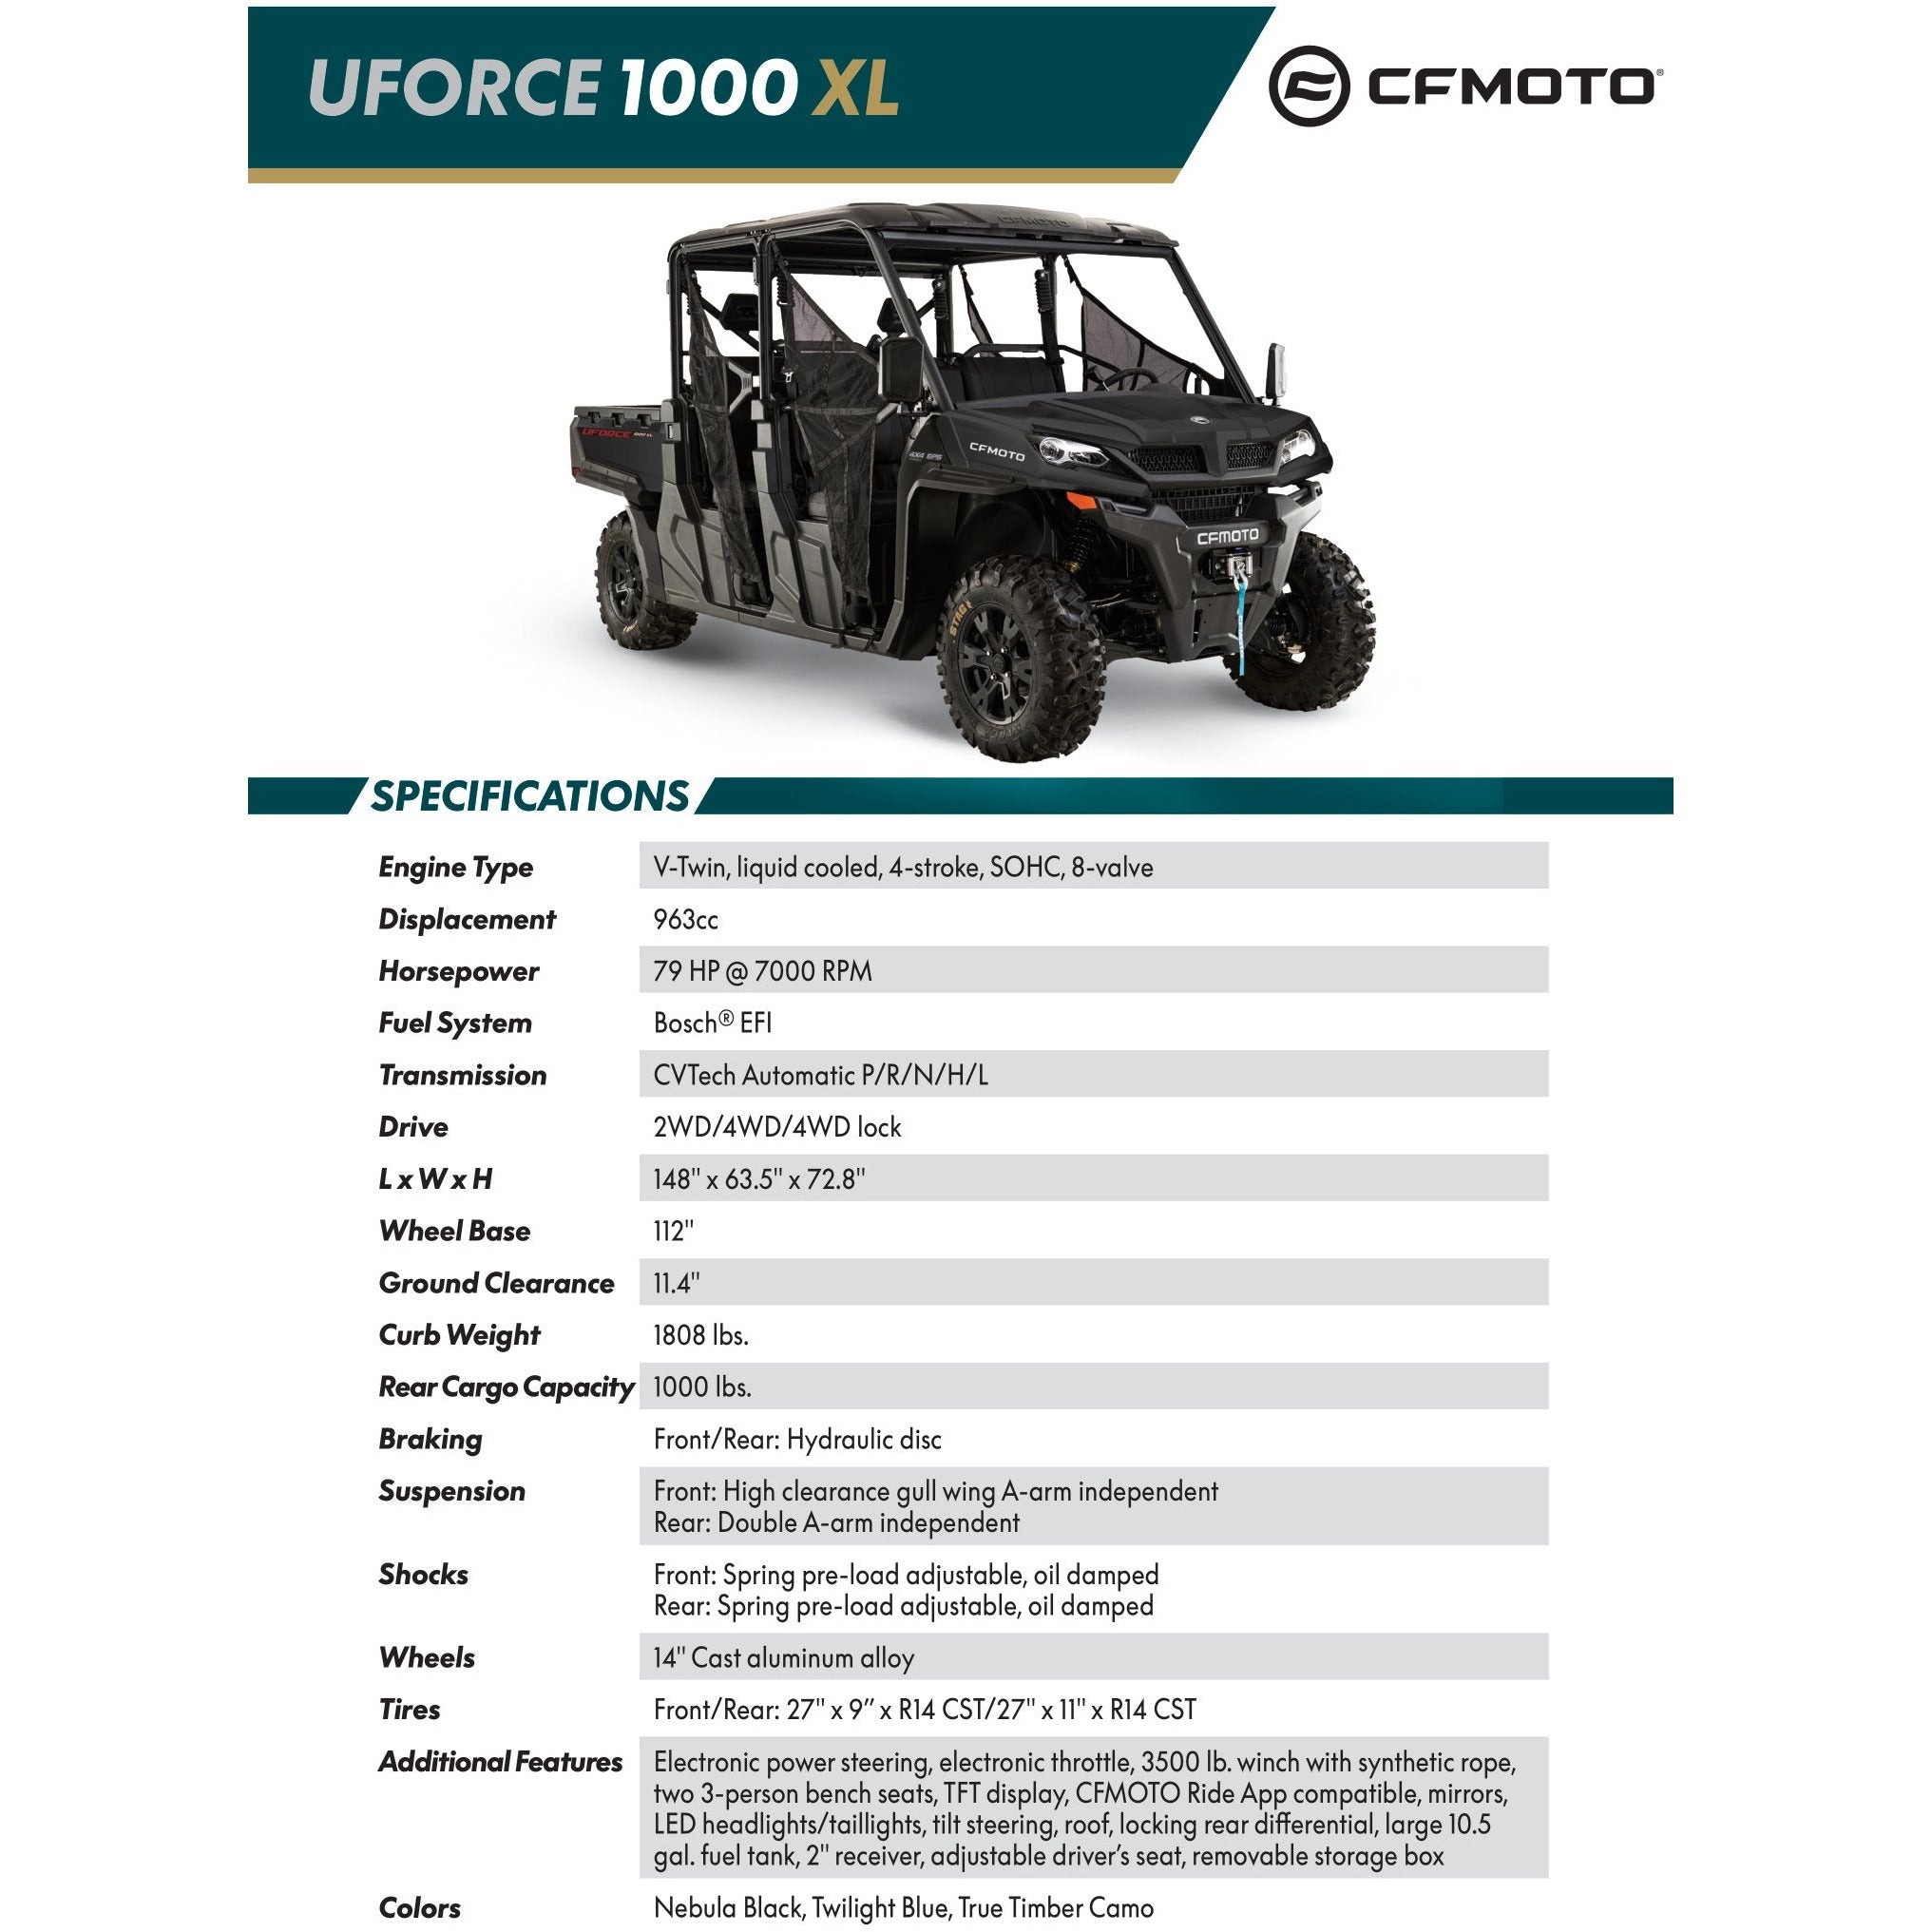 Cfmoto Uforce 1000 XL